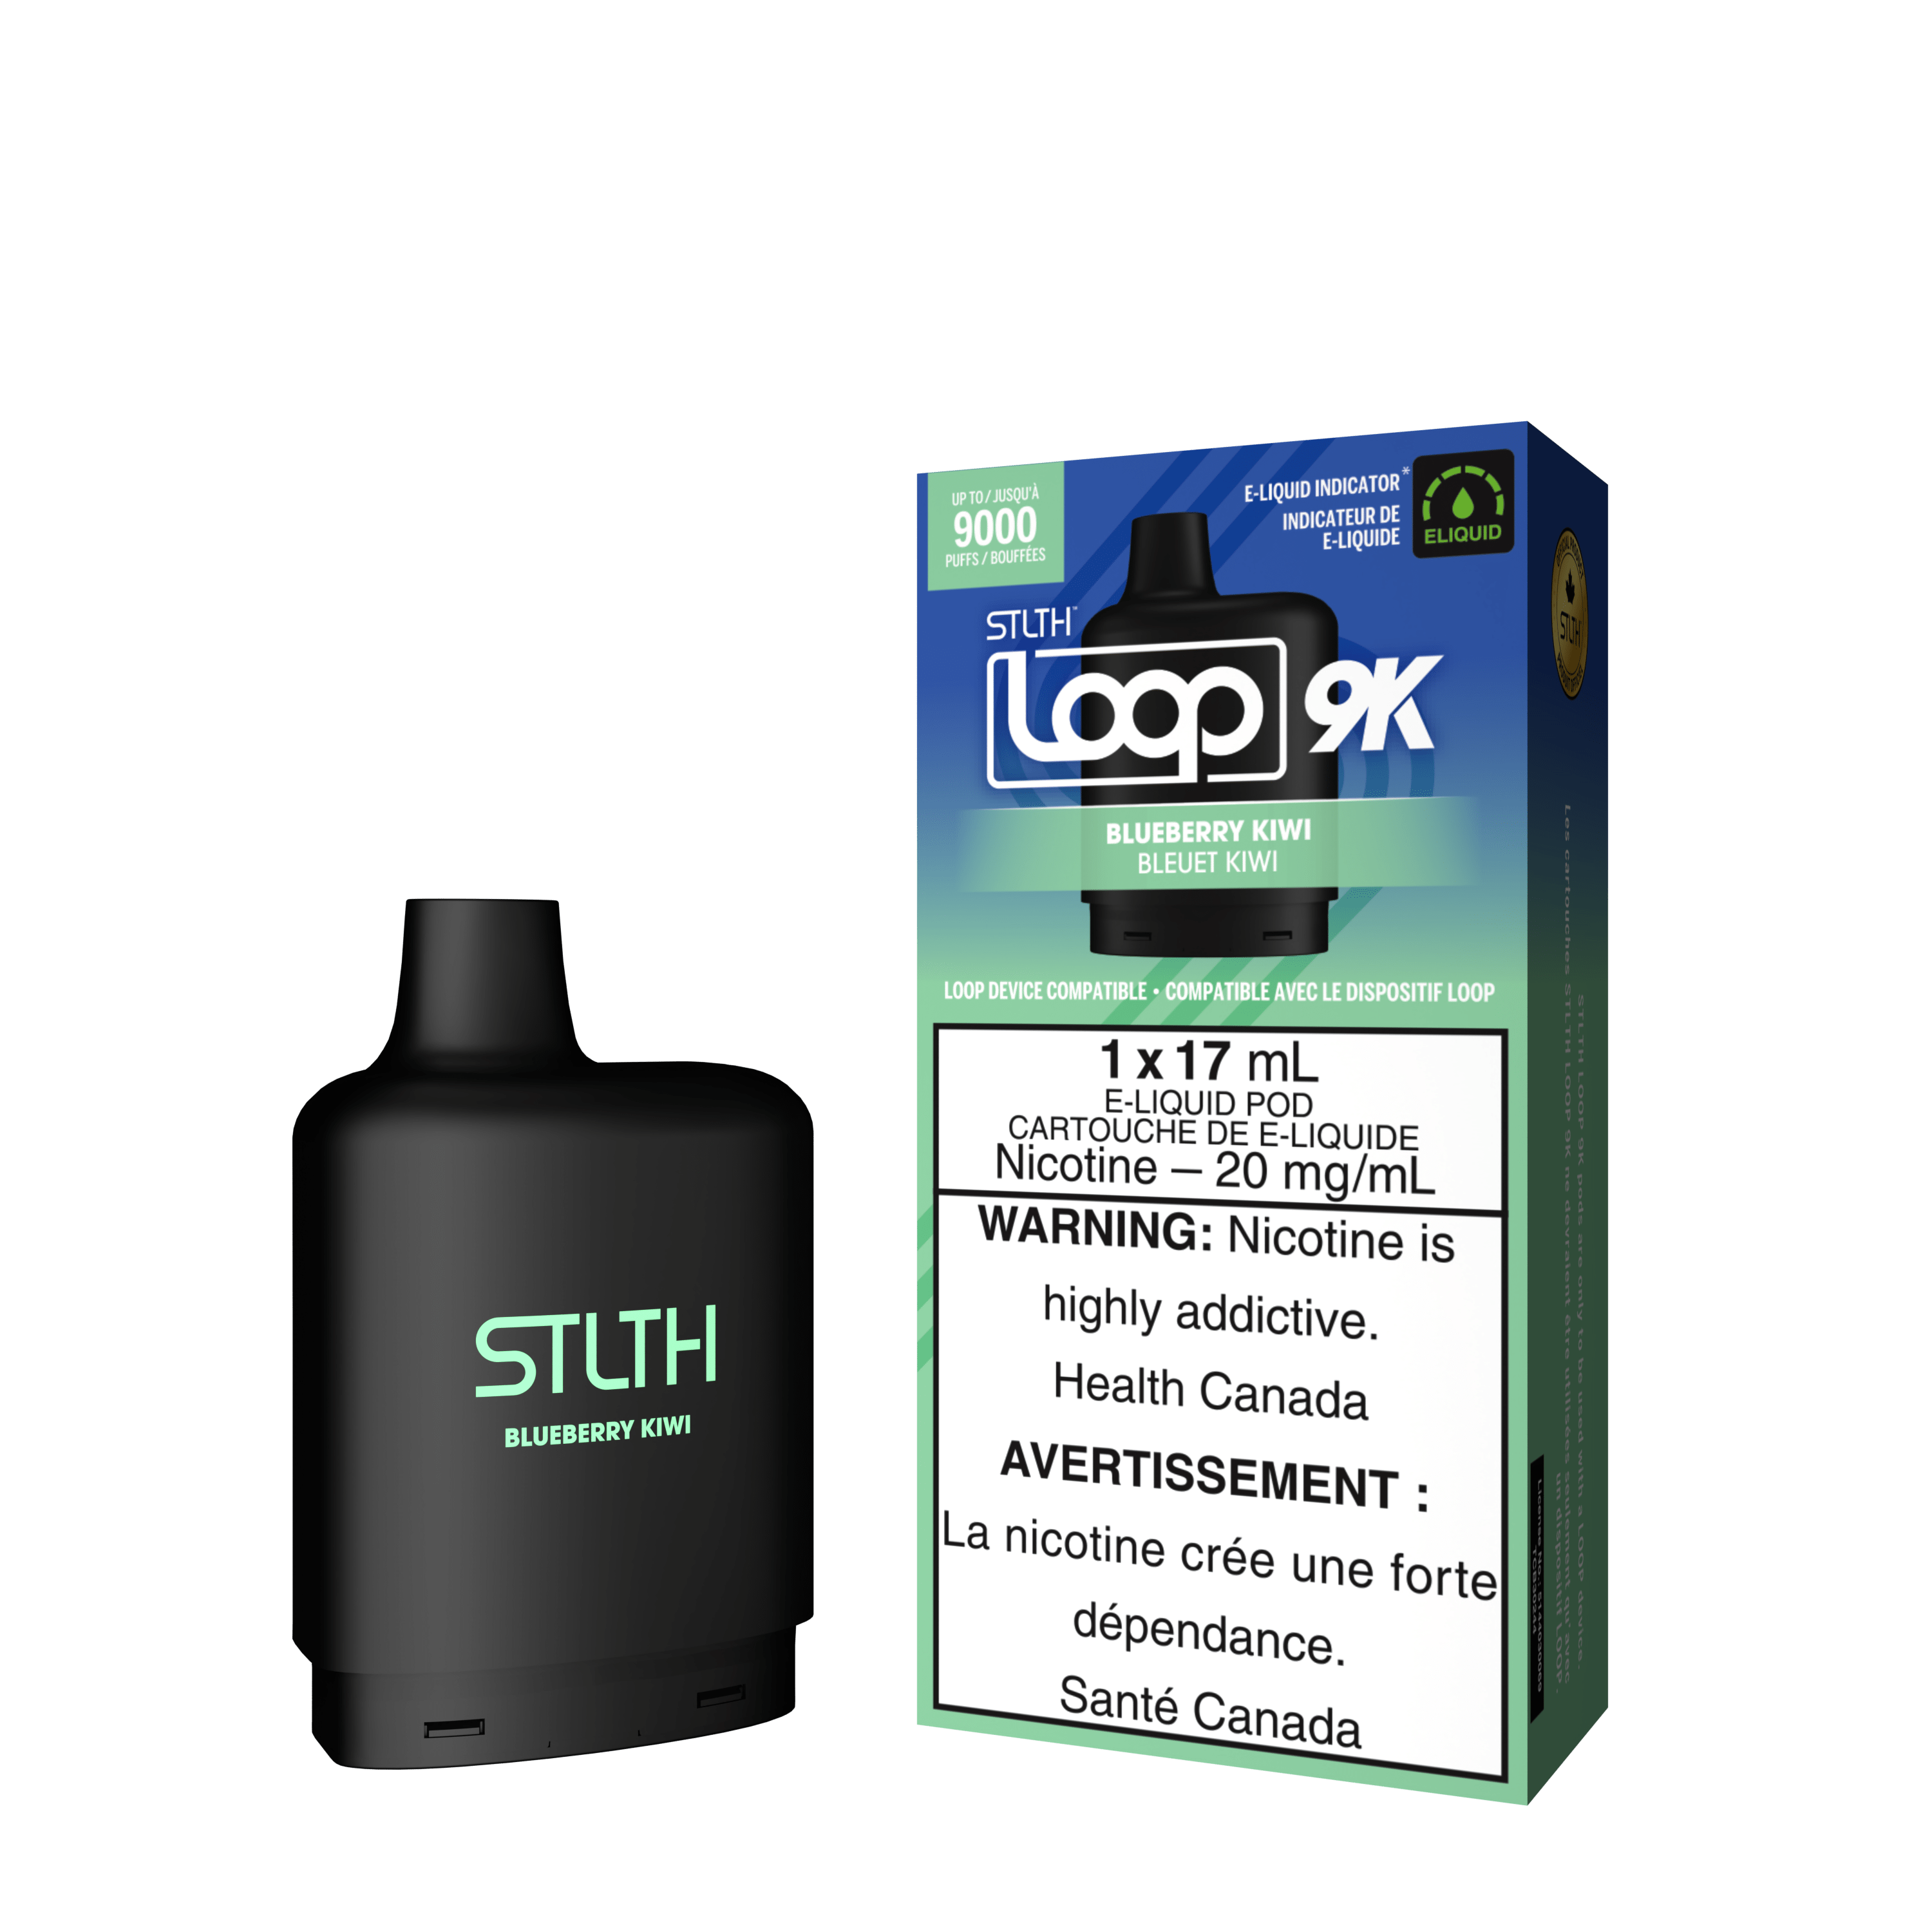 STLTH Loop 9K Pod - Blueberry Kiwi available on Canada online vape shop